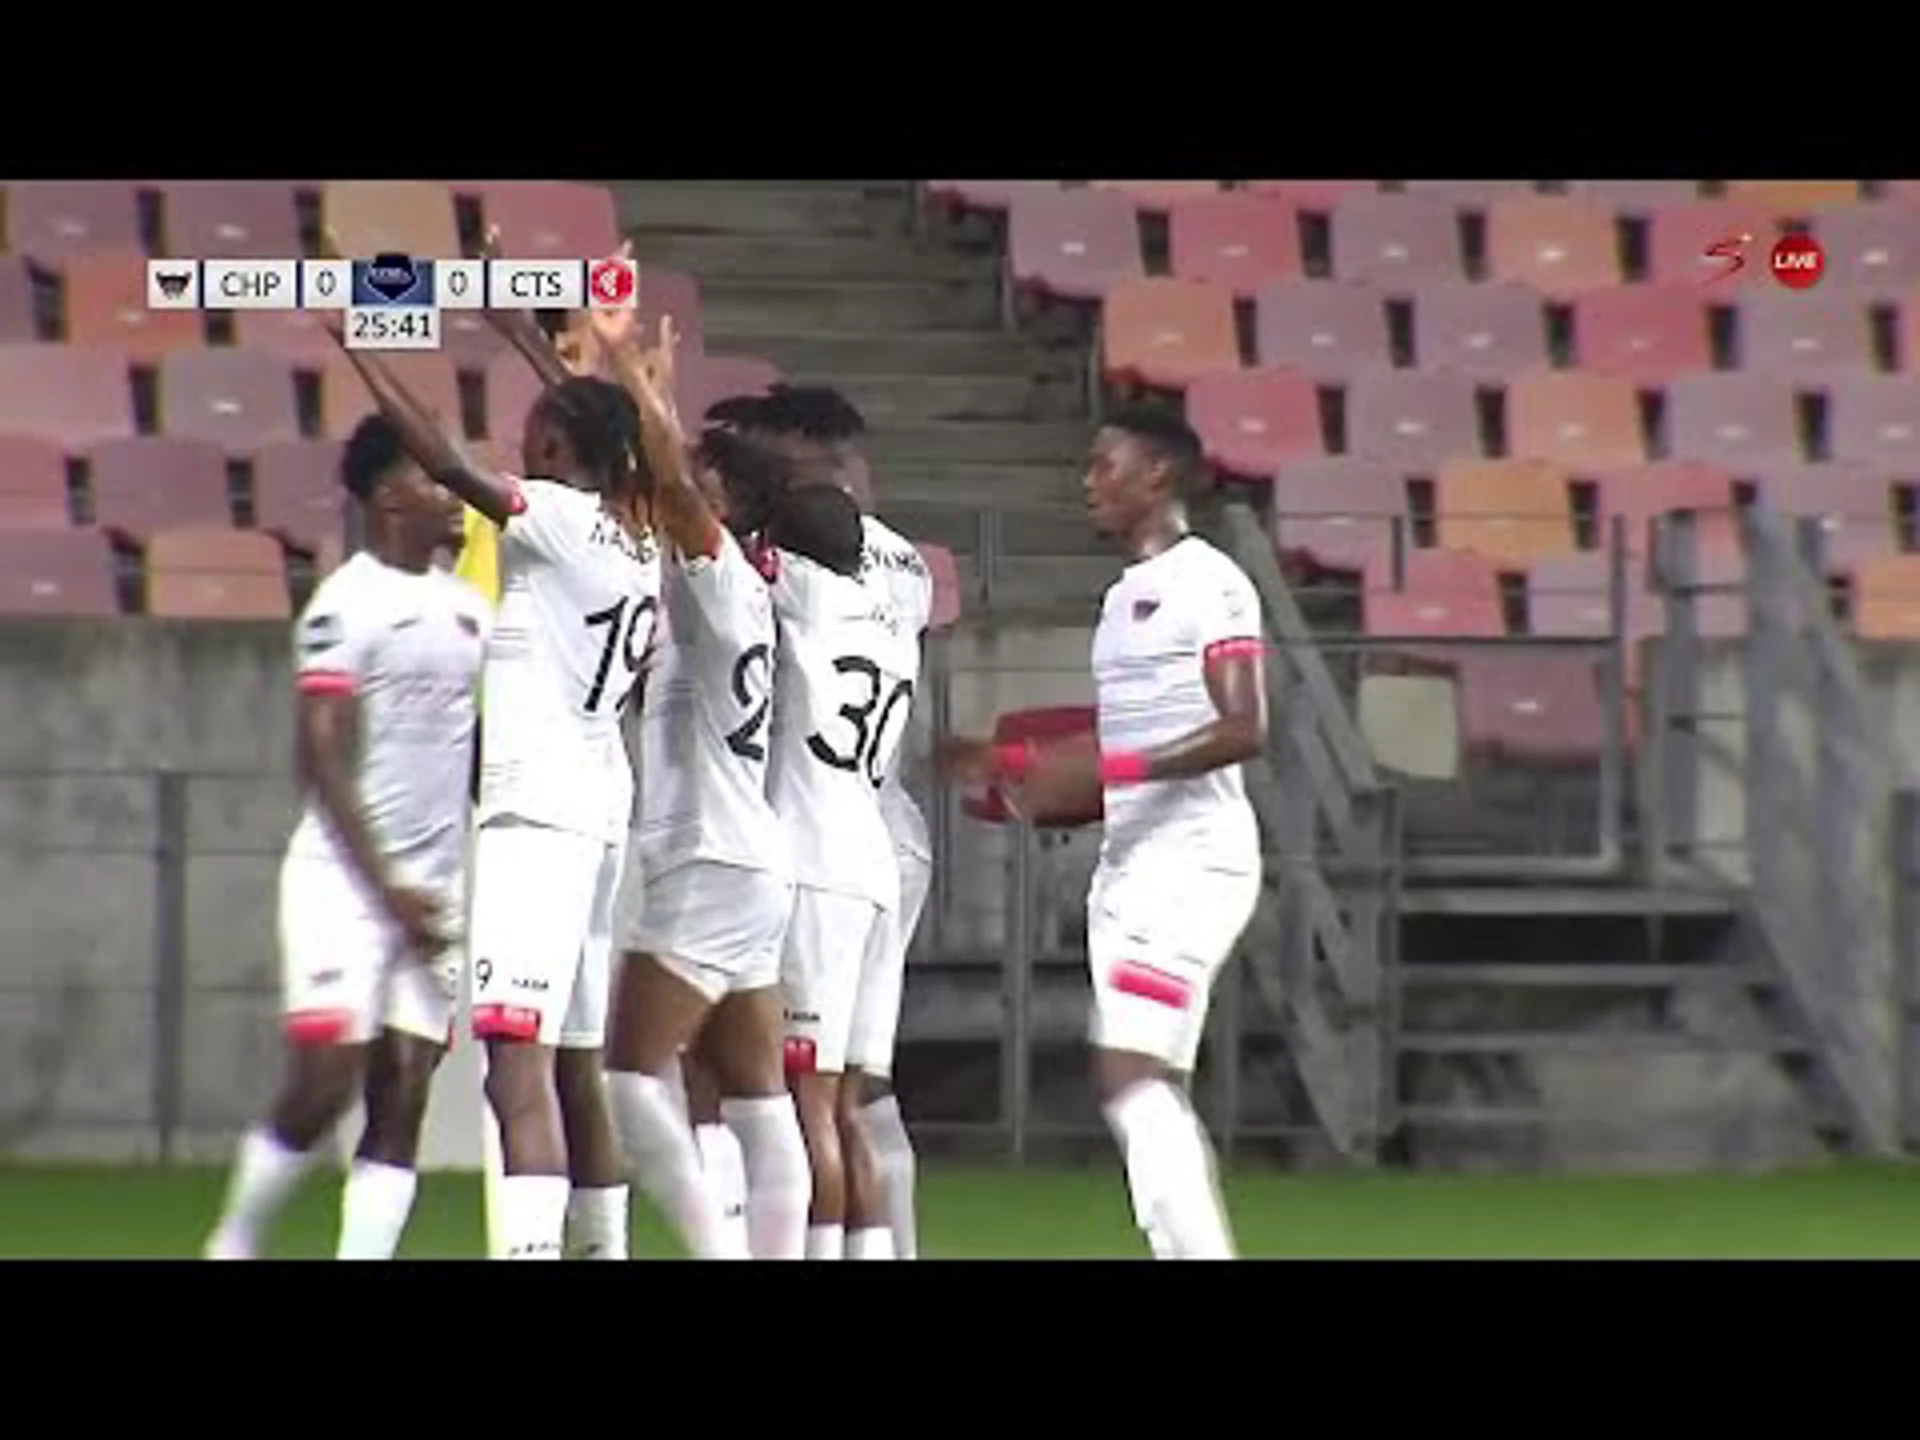 Sinoxolo Kwayiba | 26ᵗʰ Minute Goal v Cape Town Spurs